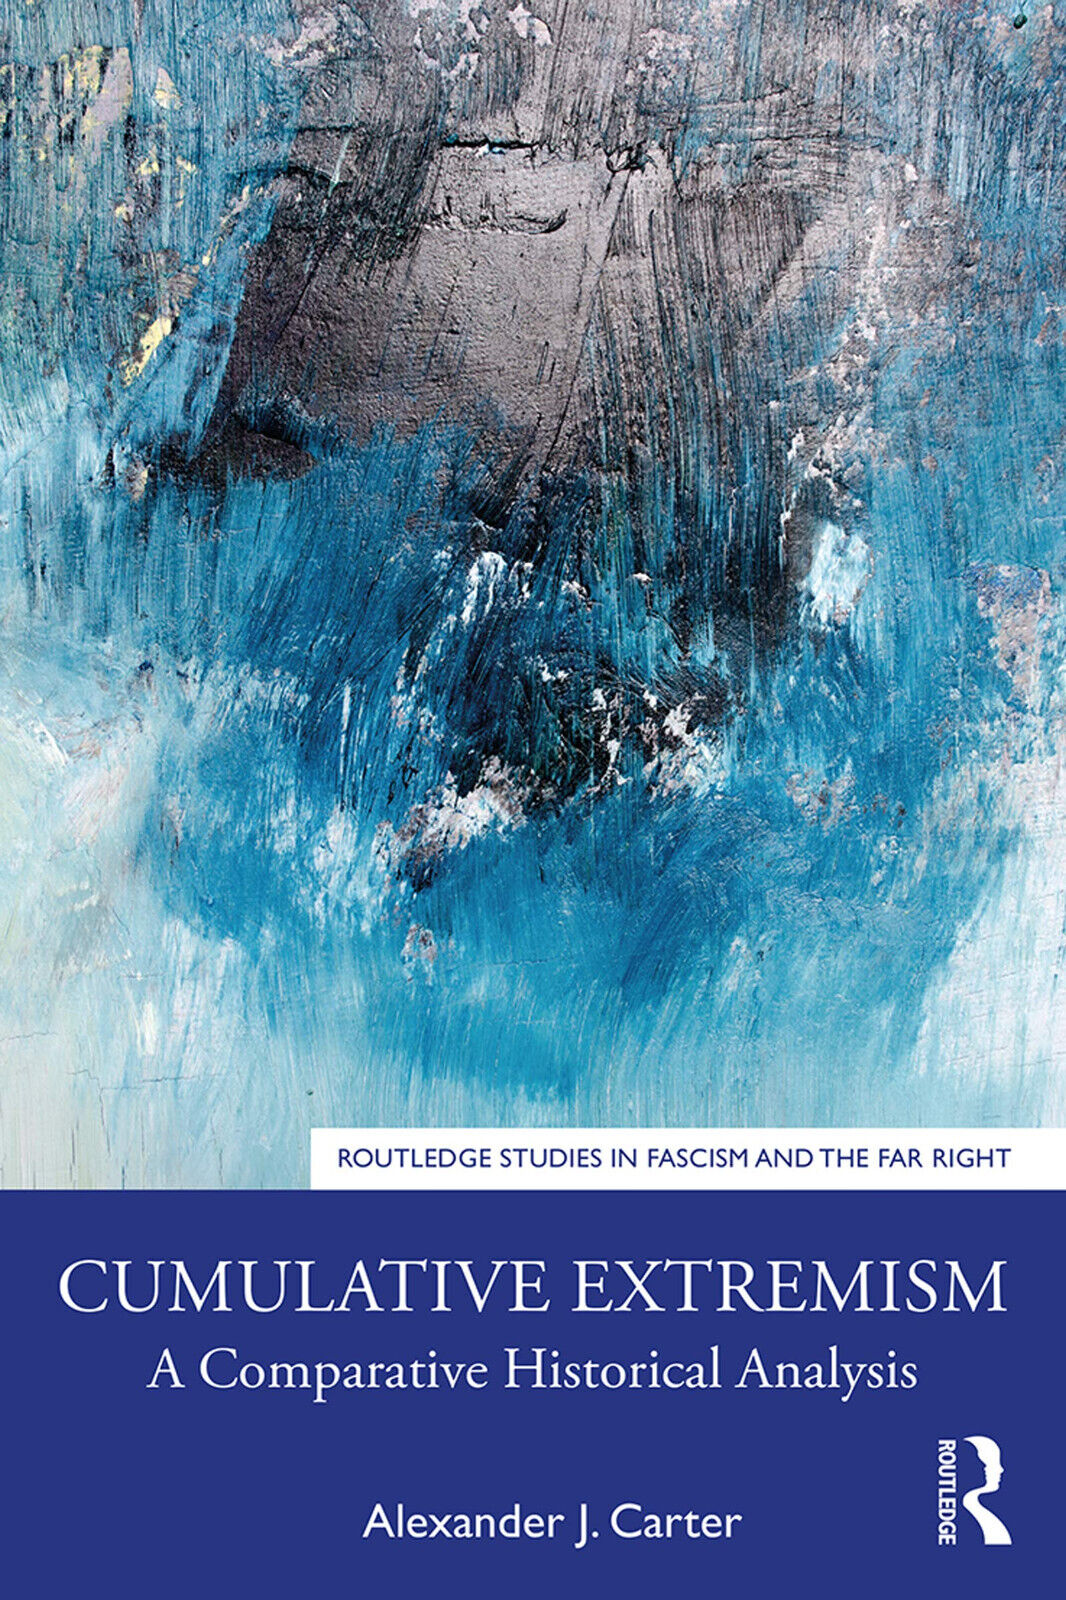 Cumulative Extremism - Alexander J Carter - Taylor & Francis, 2019